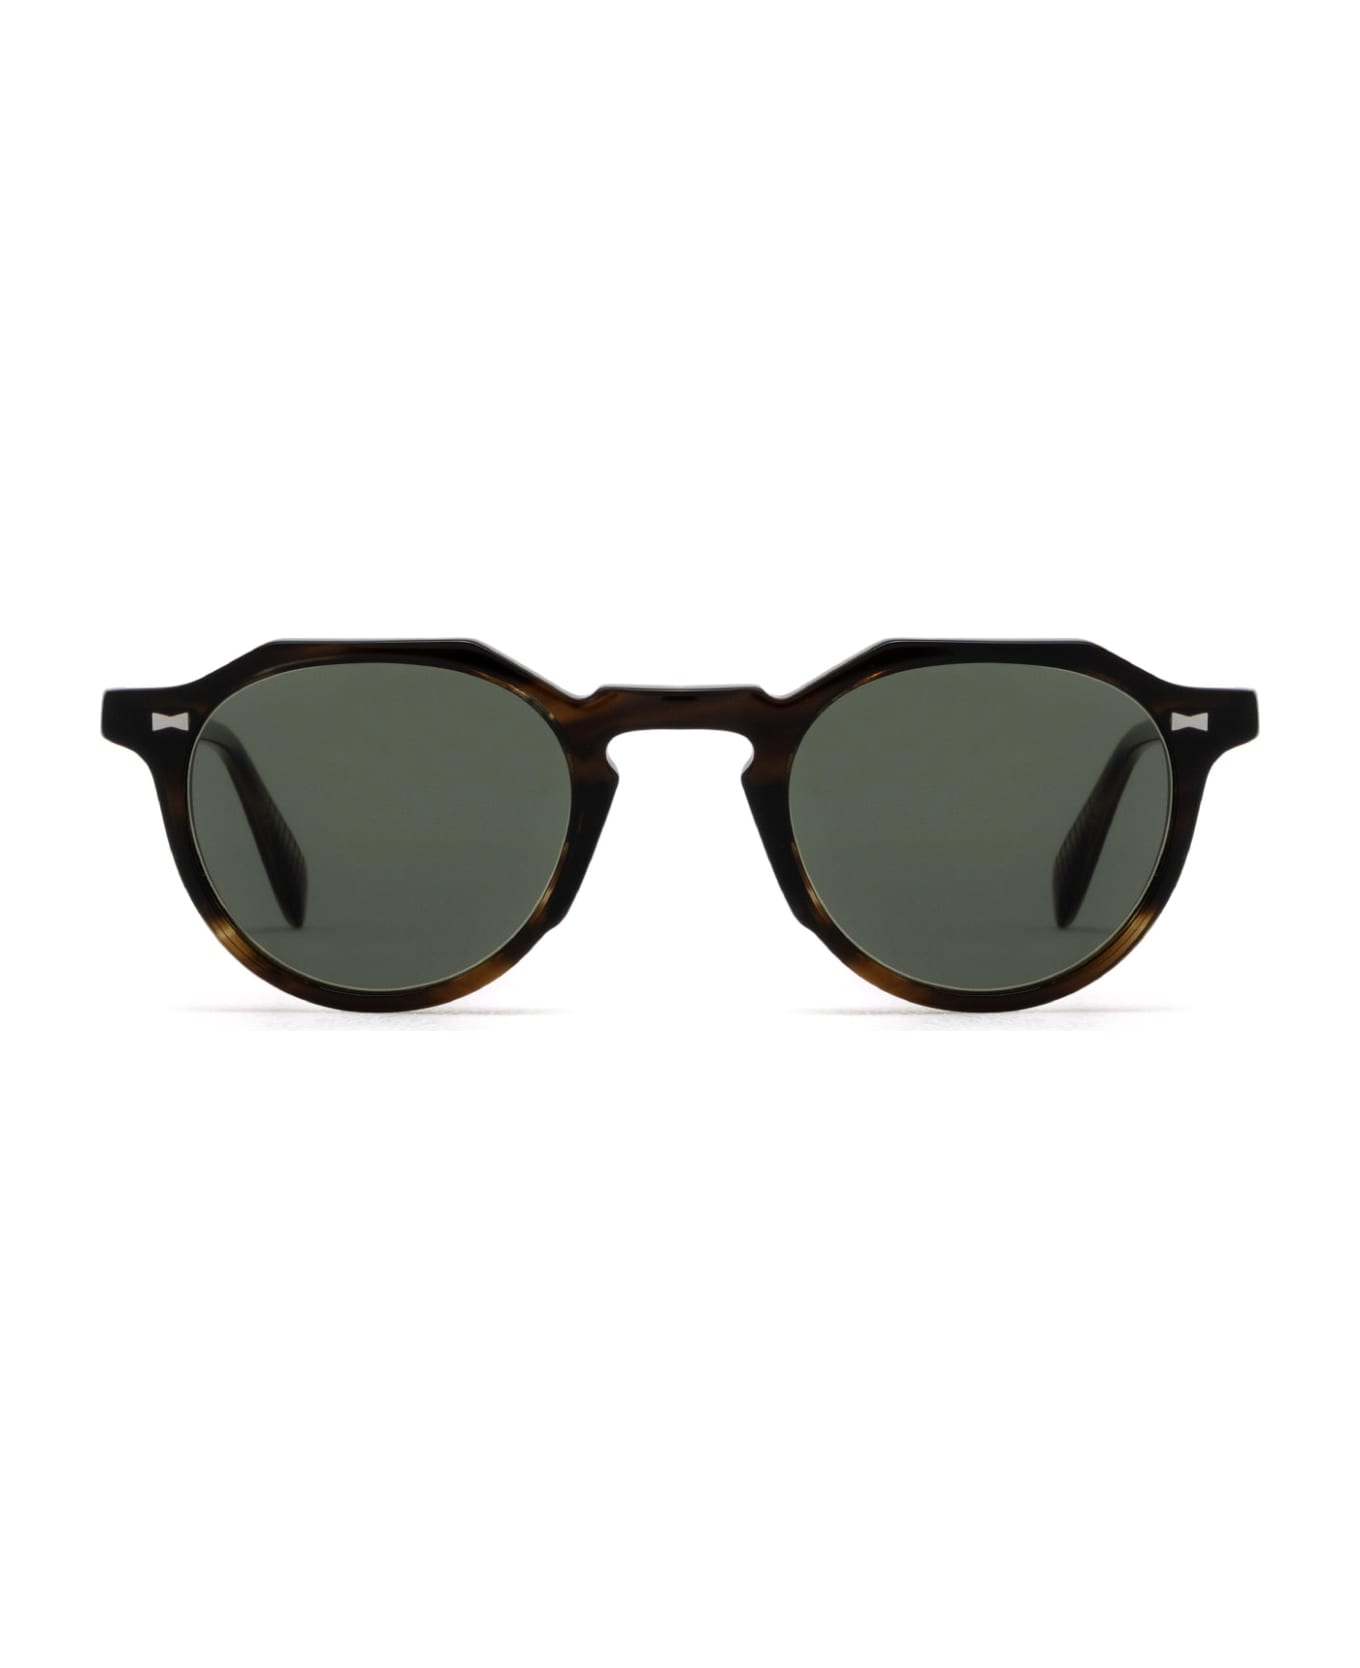 Cubitts Cartwright Ii Sun Olive Sunglasses - Olive